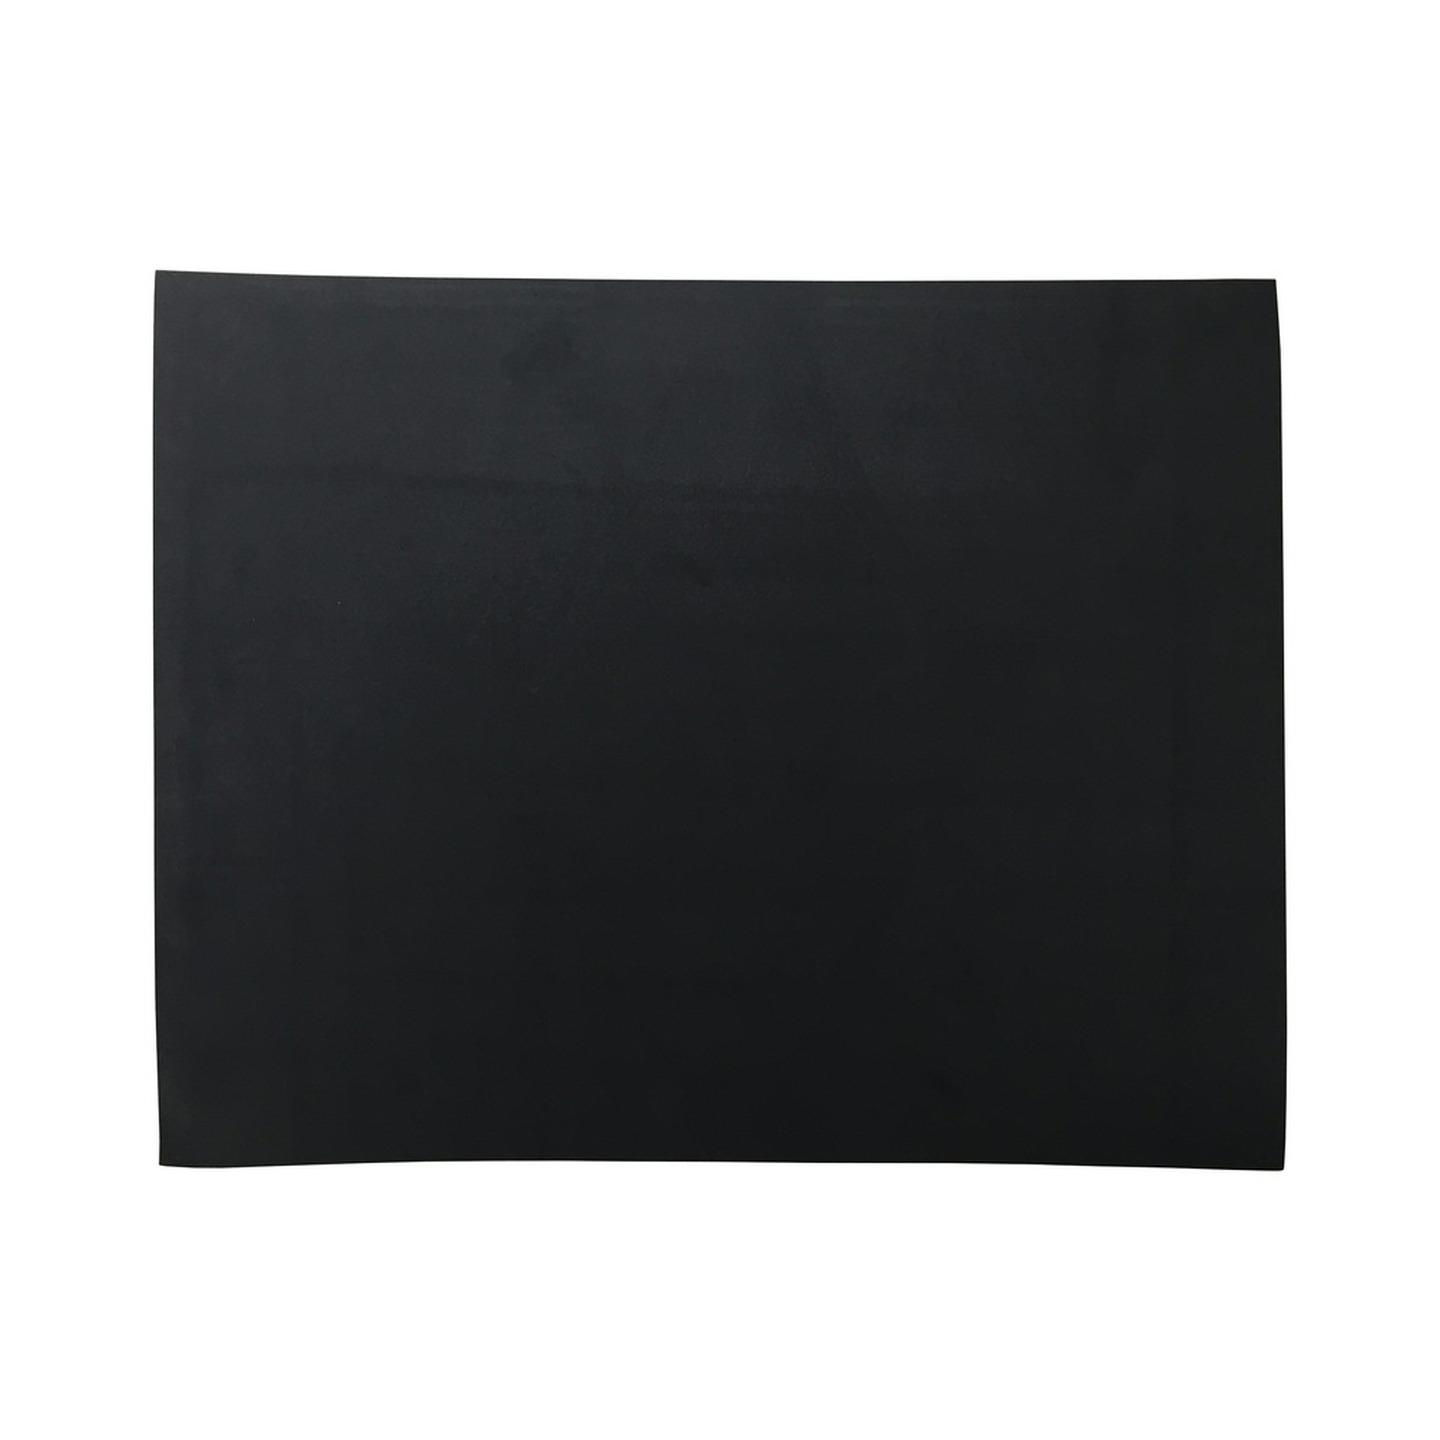 7mm Black EVA Foam Sheet 50cm x 40cm